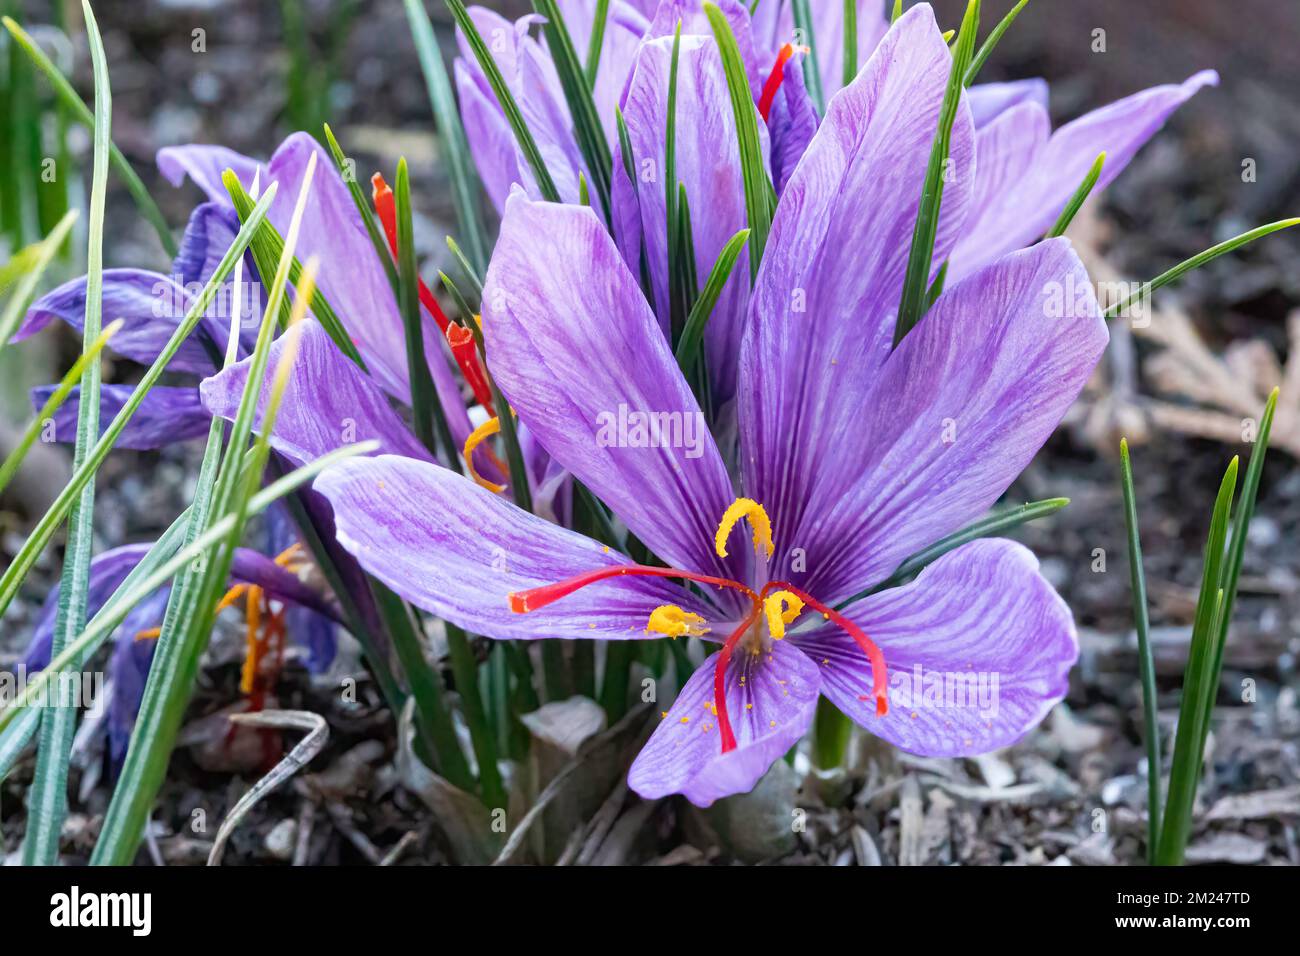 Saffron Crocus (Crocus sativus), AKA: Autumn crocus in bloom. It's stigmas are known as the spice saffron. Stock Photo